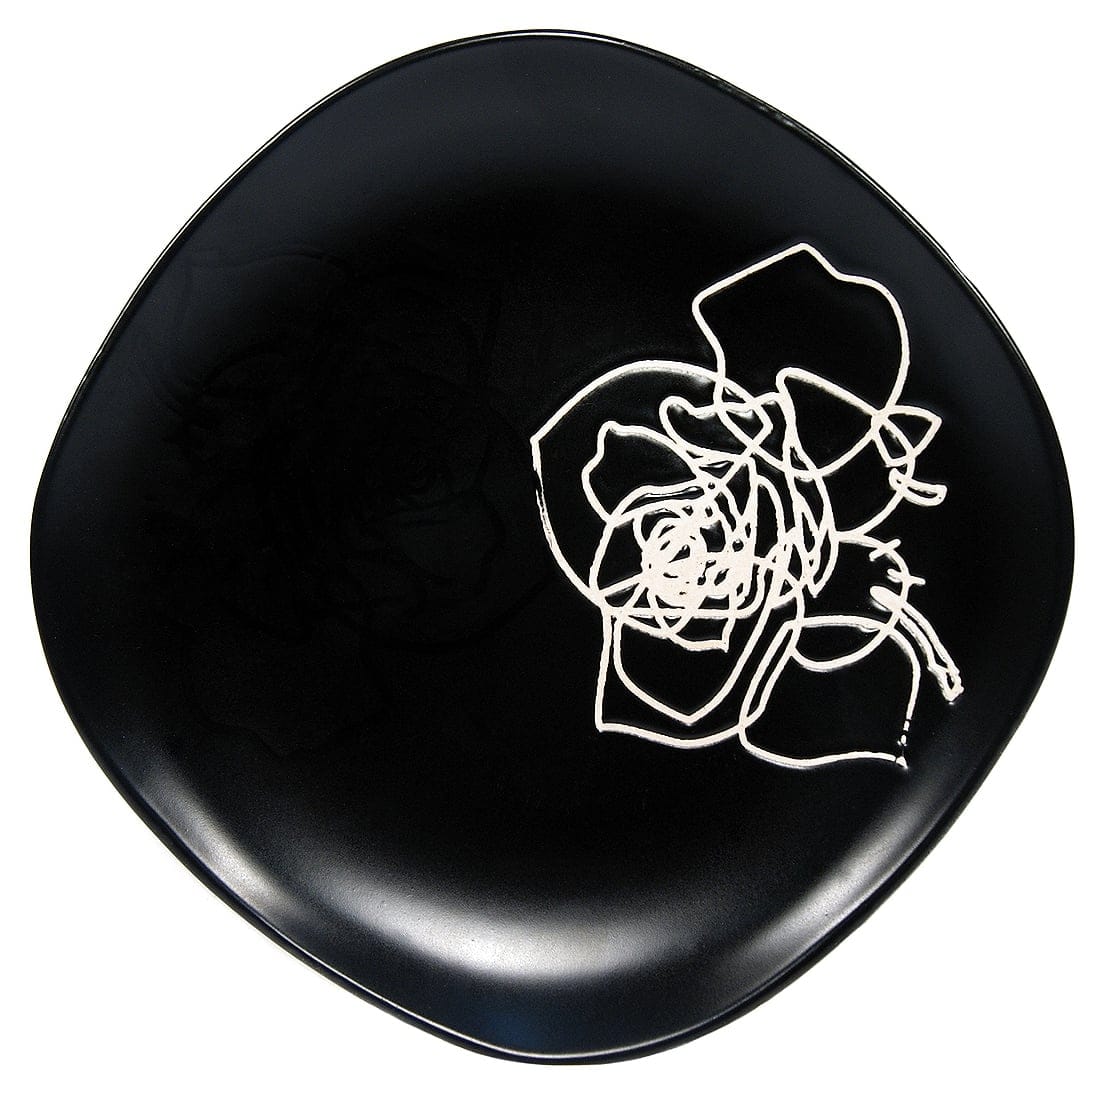 Тарелка десертная Black rose, 20 см, Керамика, China Pearl, Китай